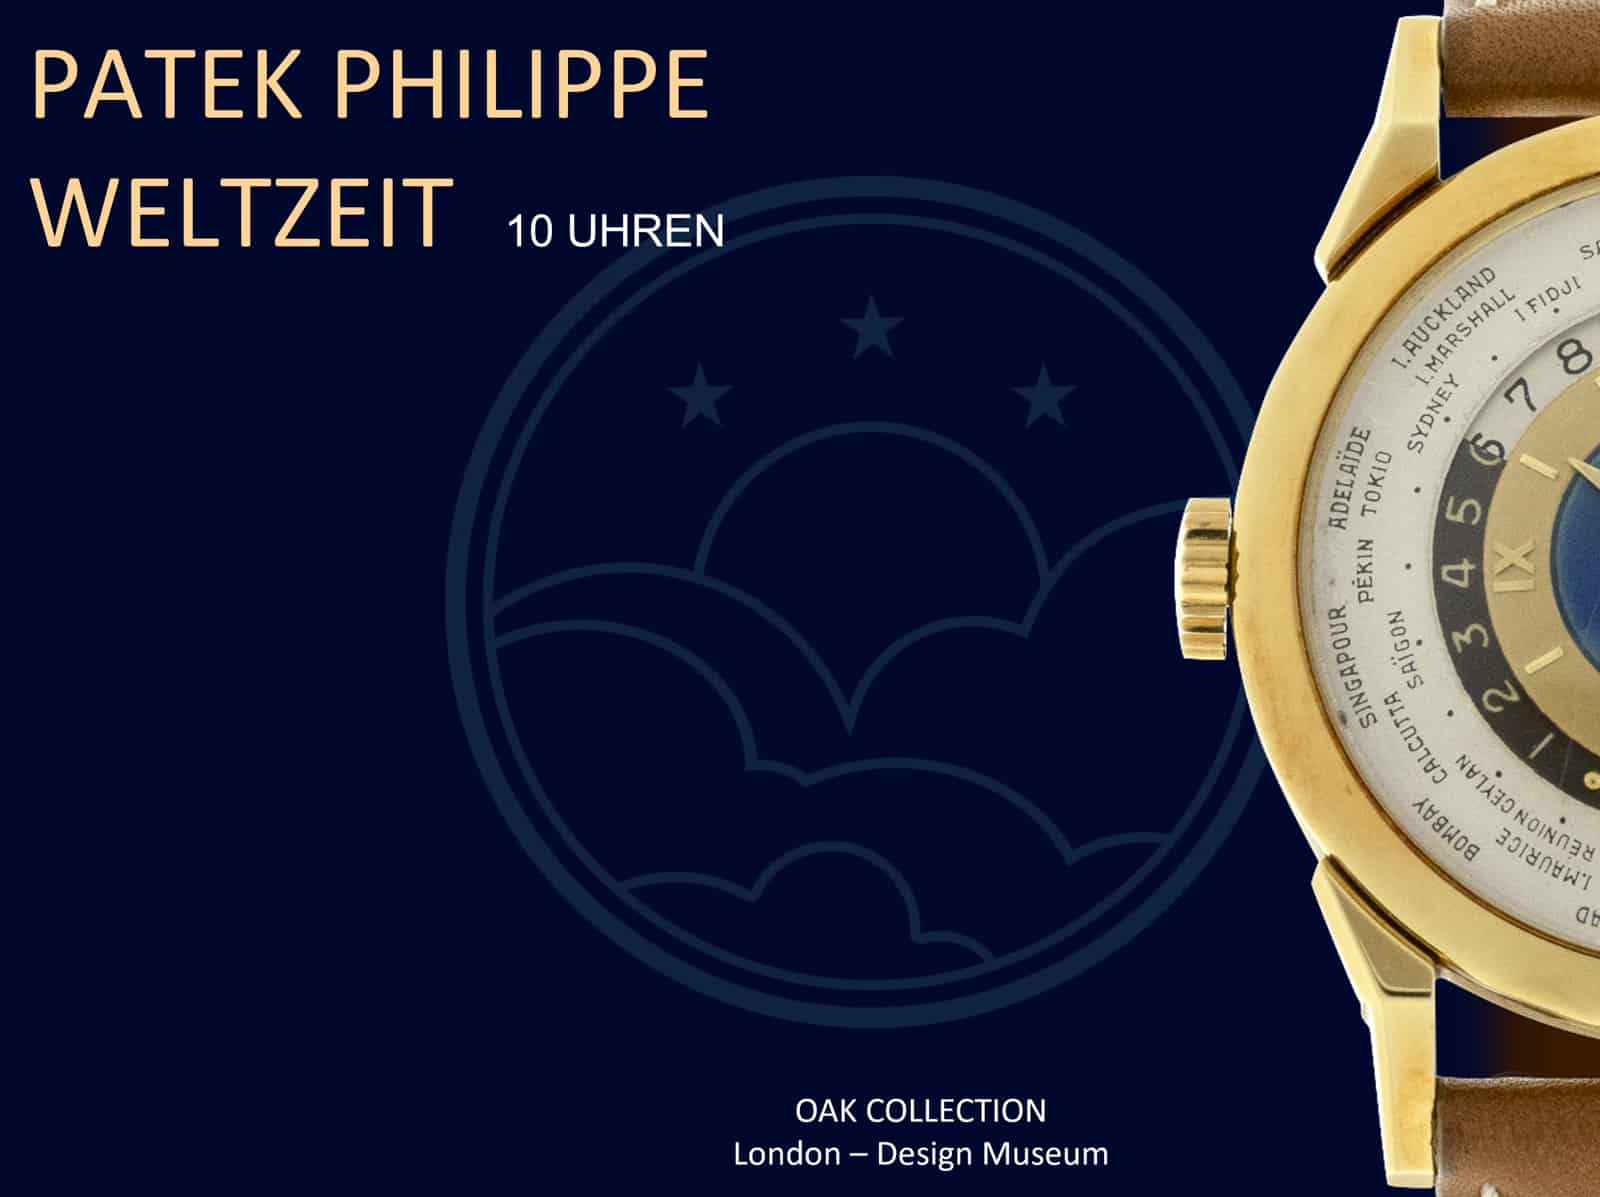 The OAK Collection Patek Philippe Weltzeit